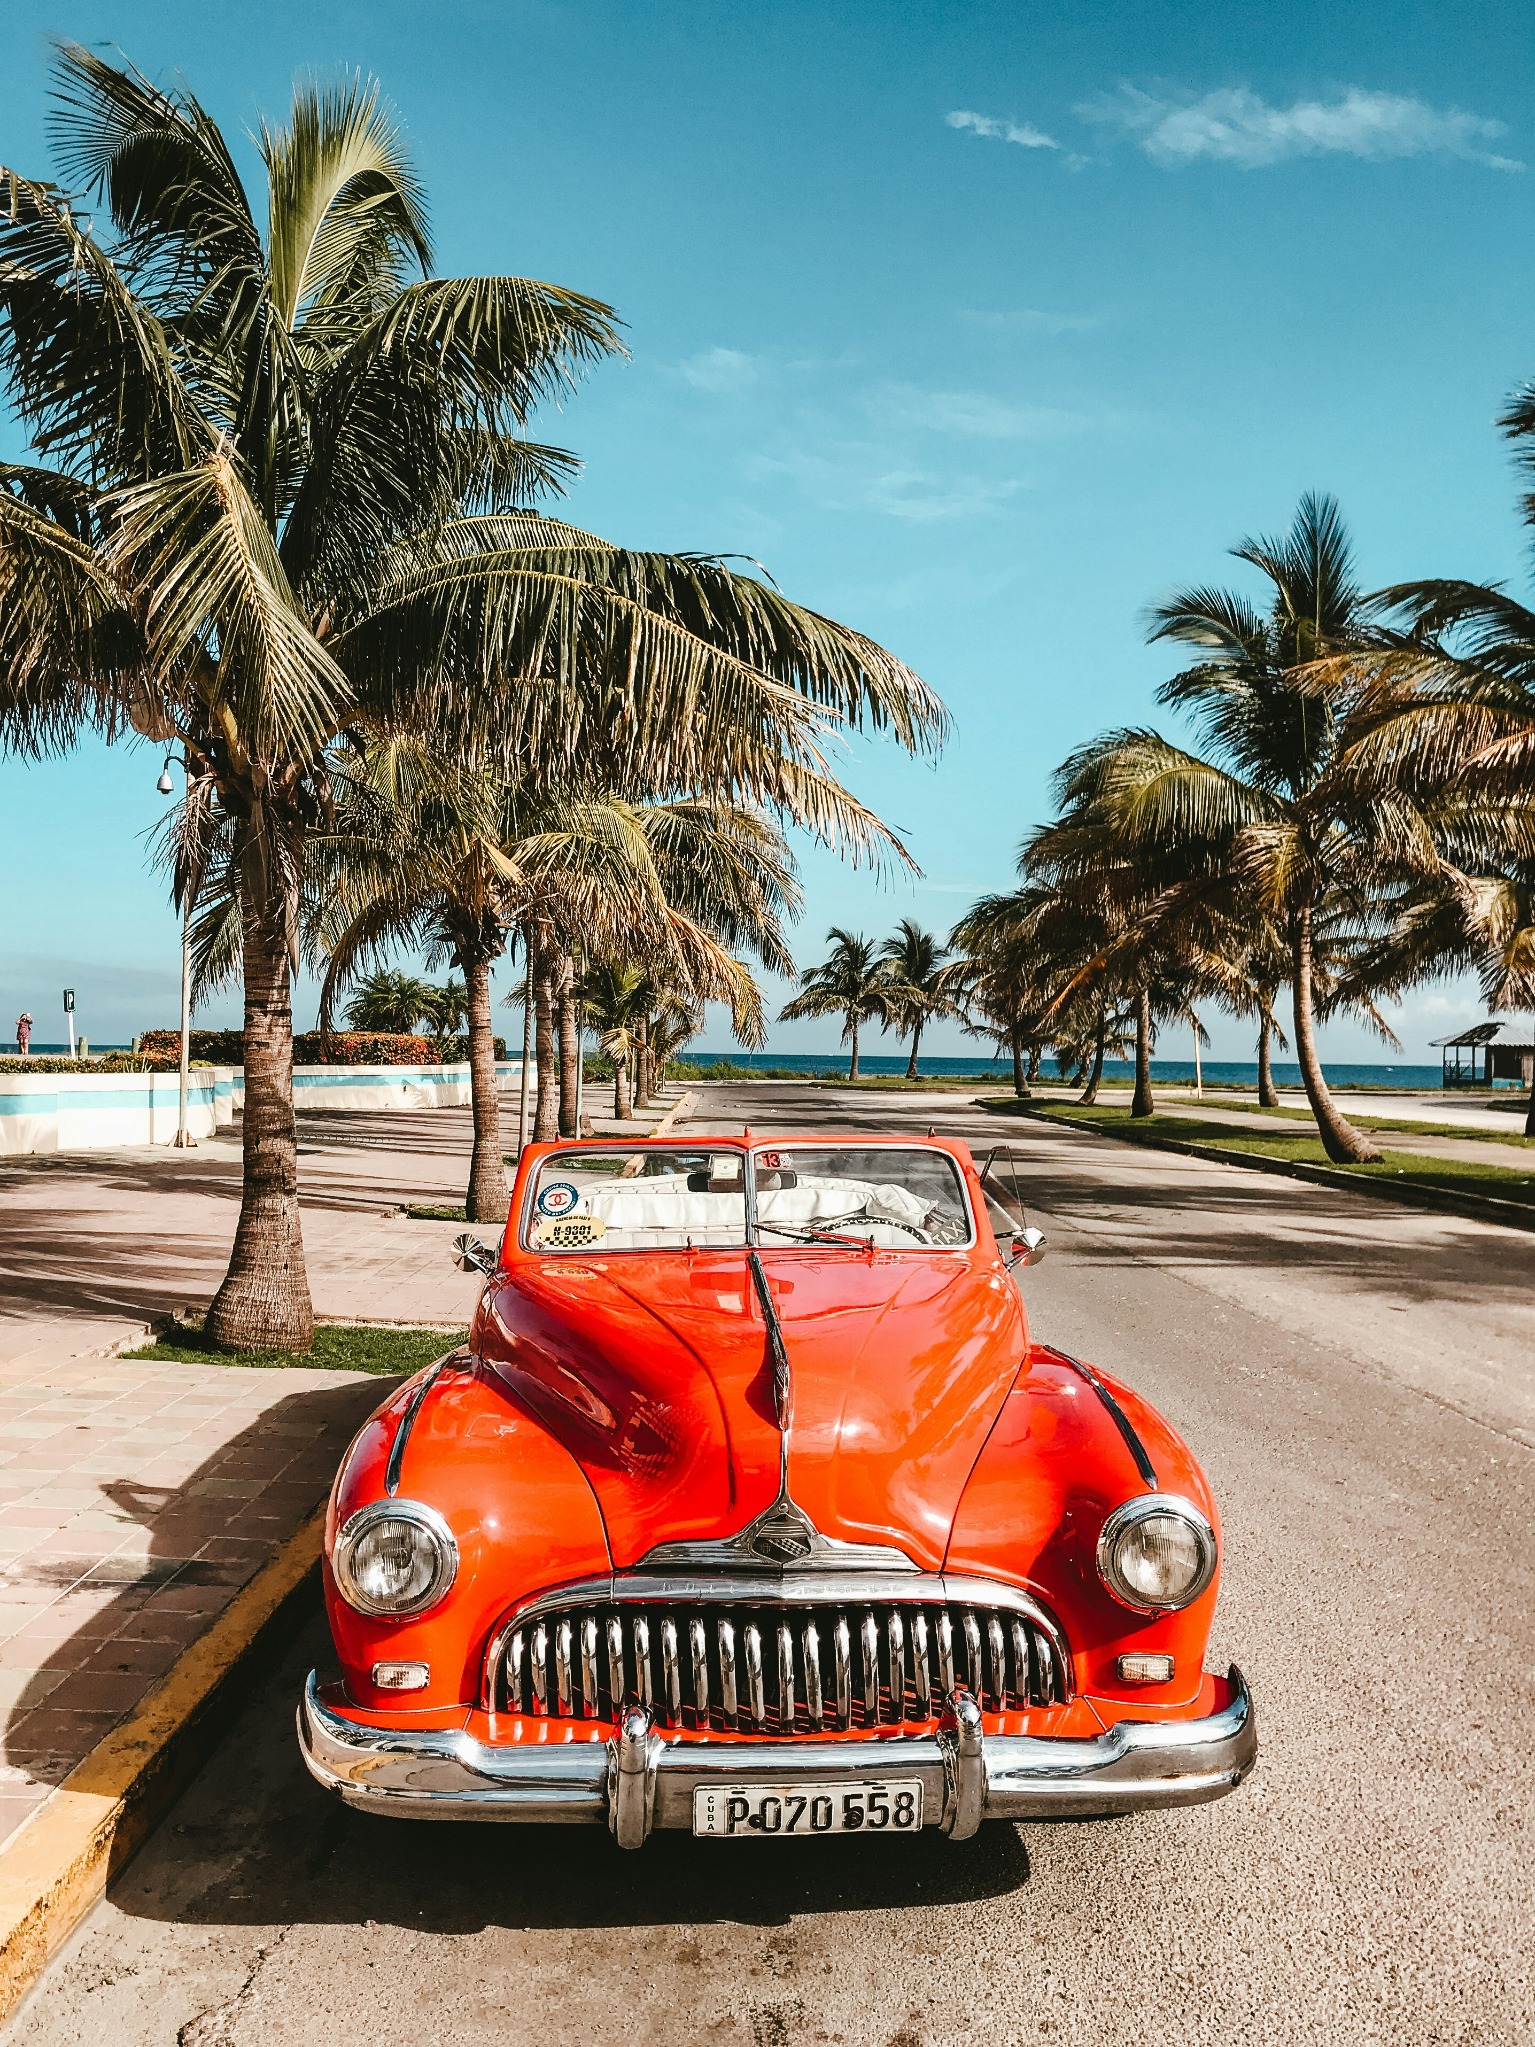 Vintage red car tropical